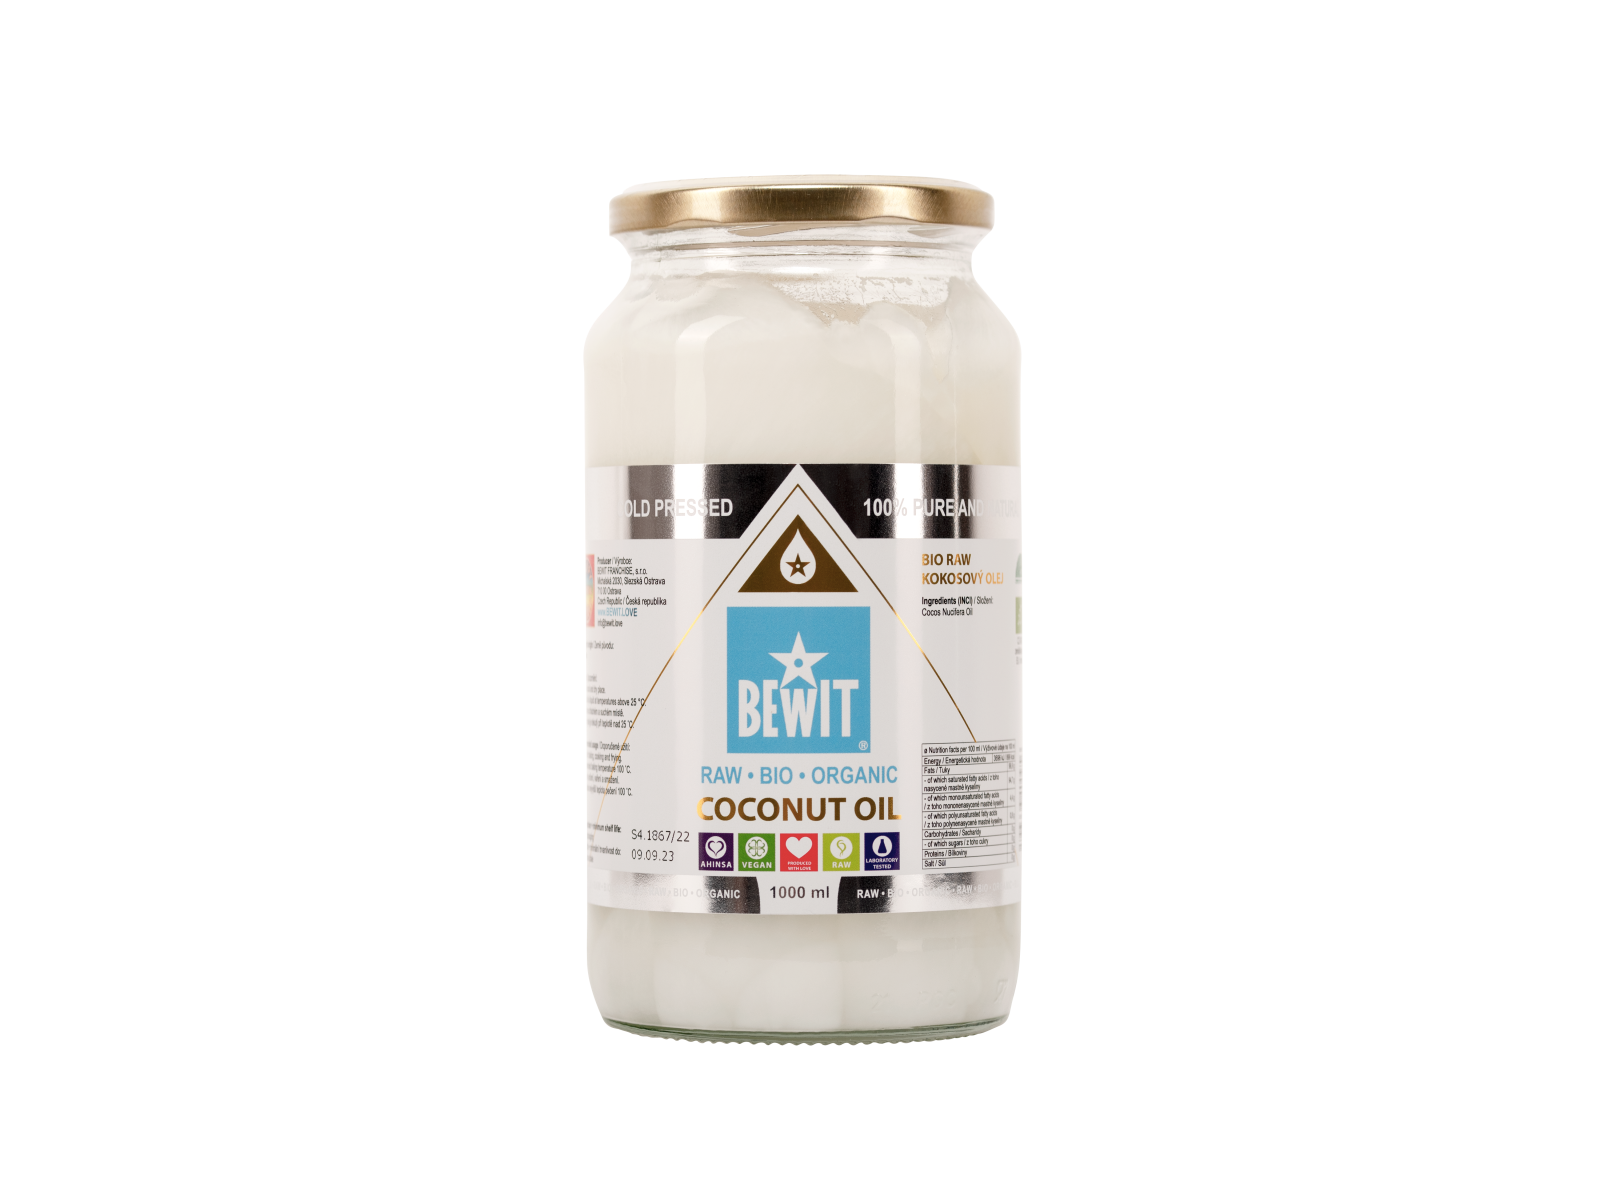 BEWIT Kokosový olej BIO - 100% čistý a přírodní rostlinný olej